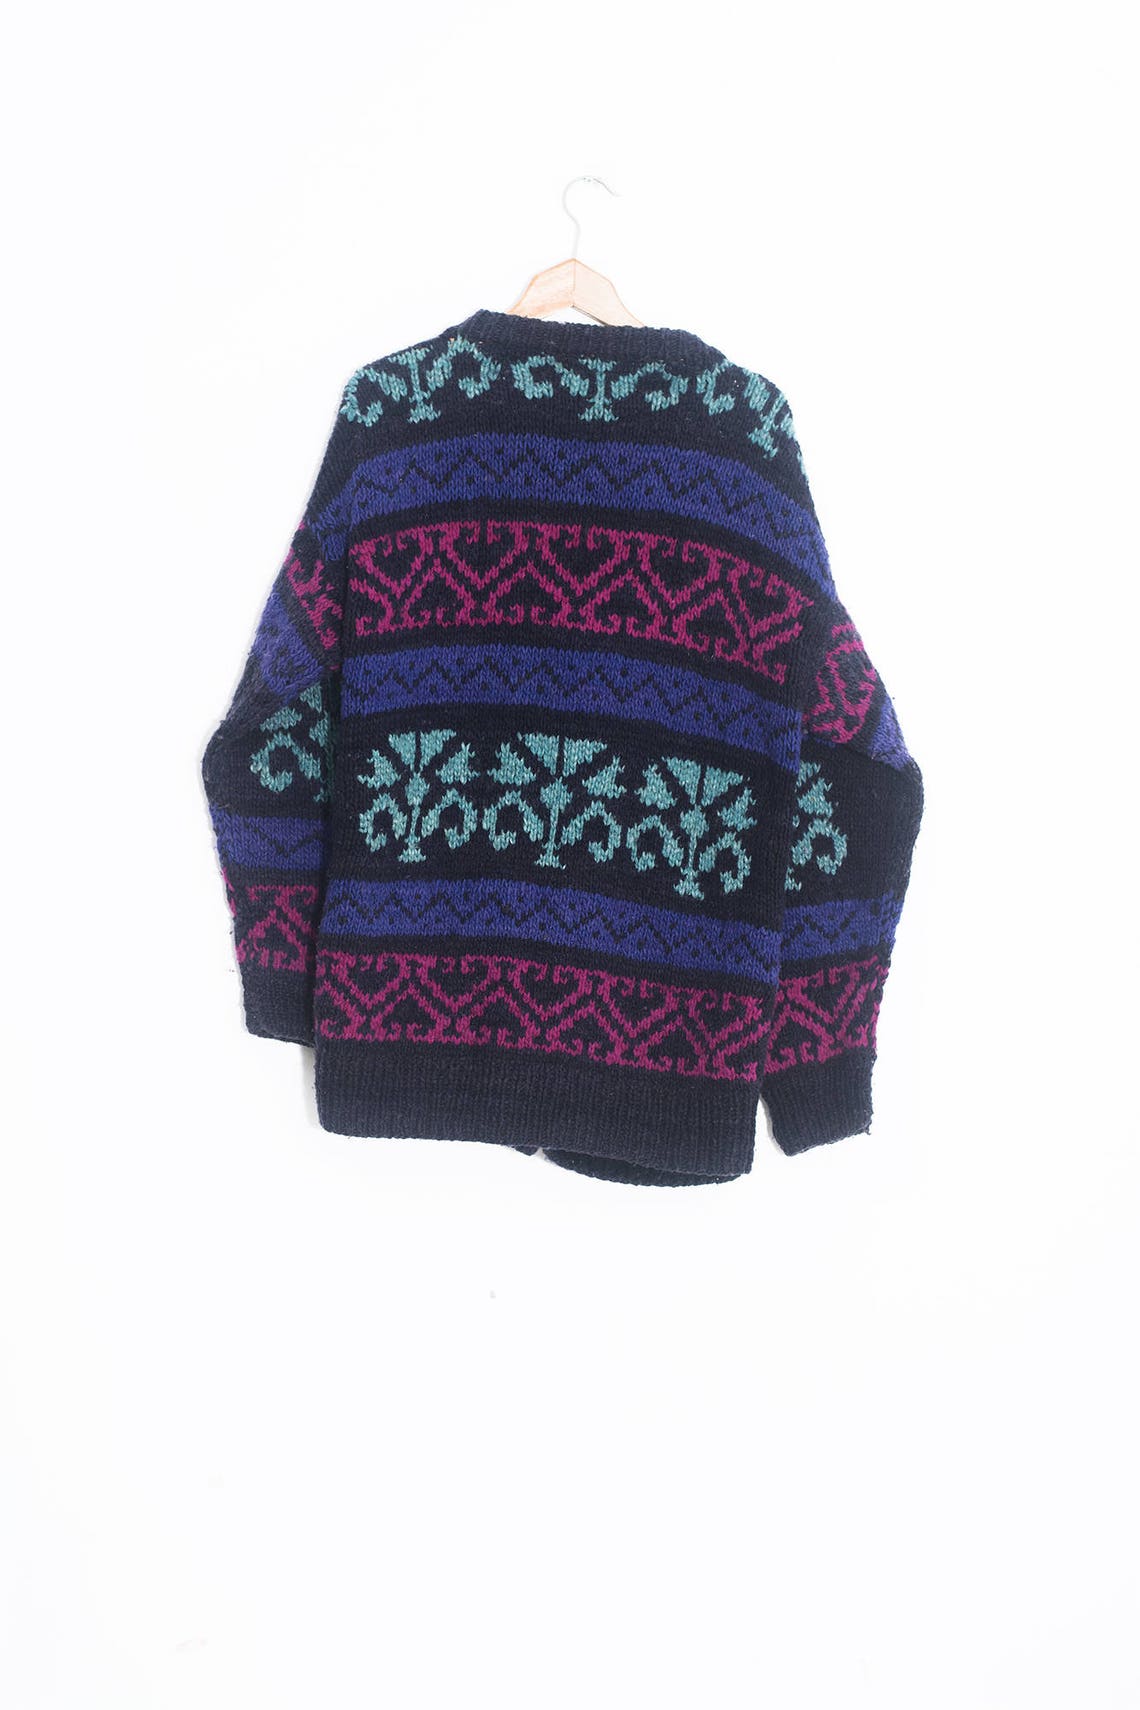 Colorful wool sweater Winter wool sweater Retro wool | Etsy